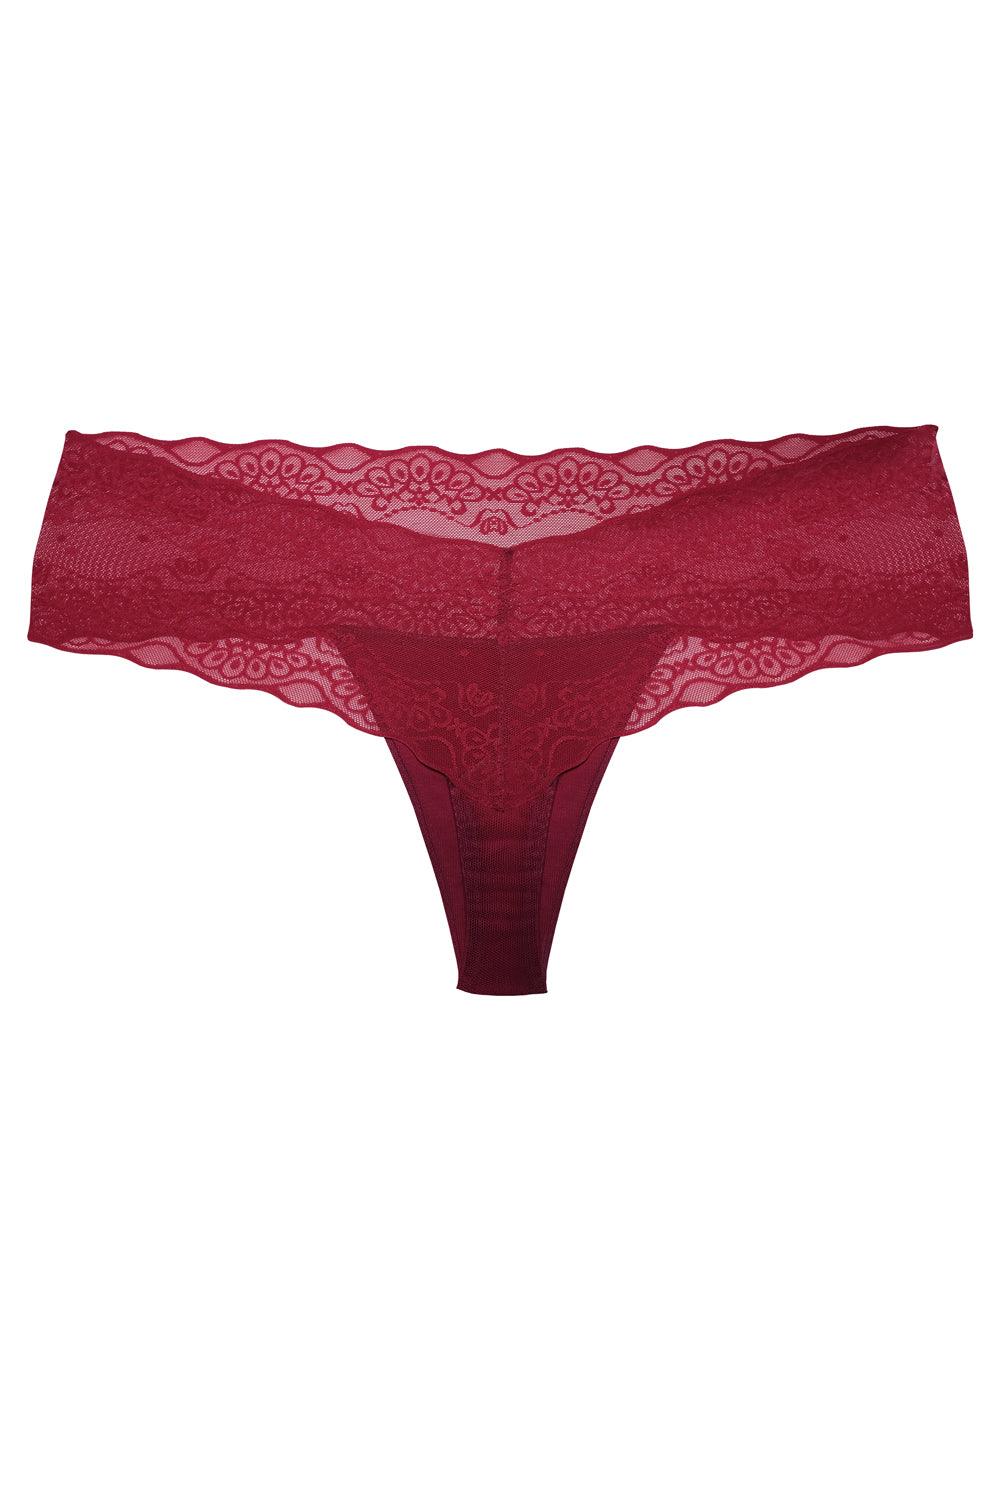 Wingy maroon brazilian panties - Brazilian panties by WOW! Panties. Shop on yesUndress